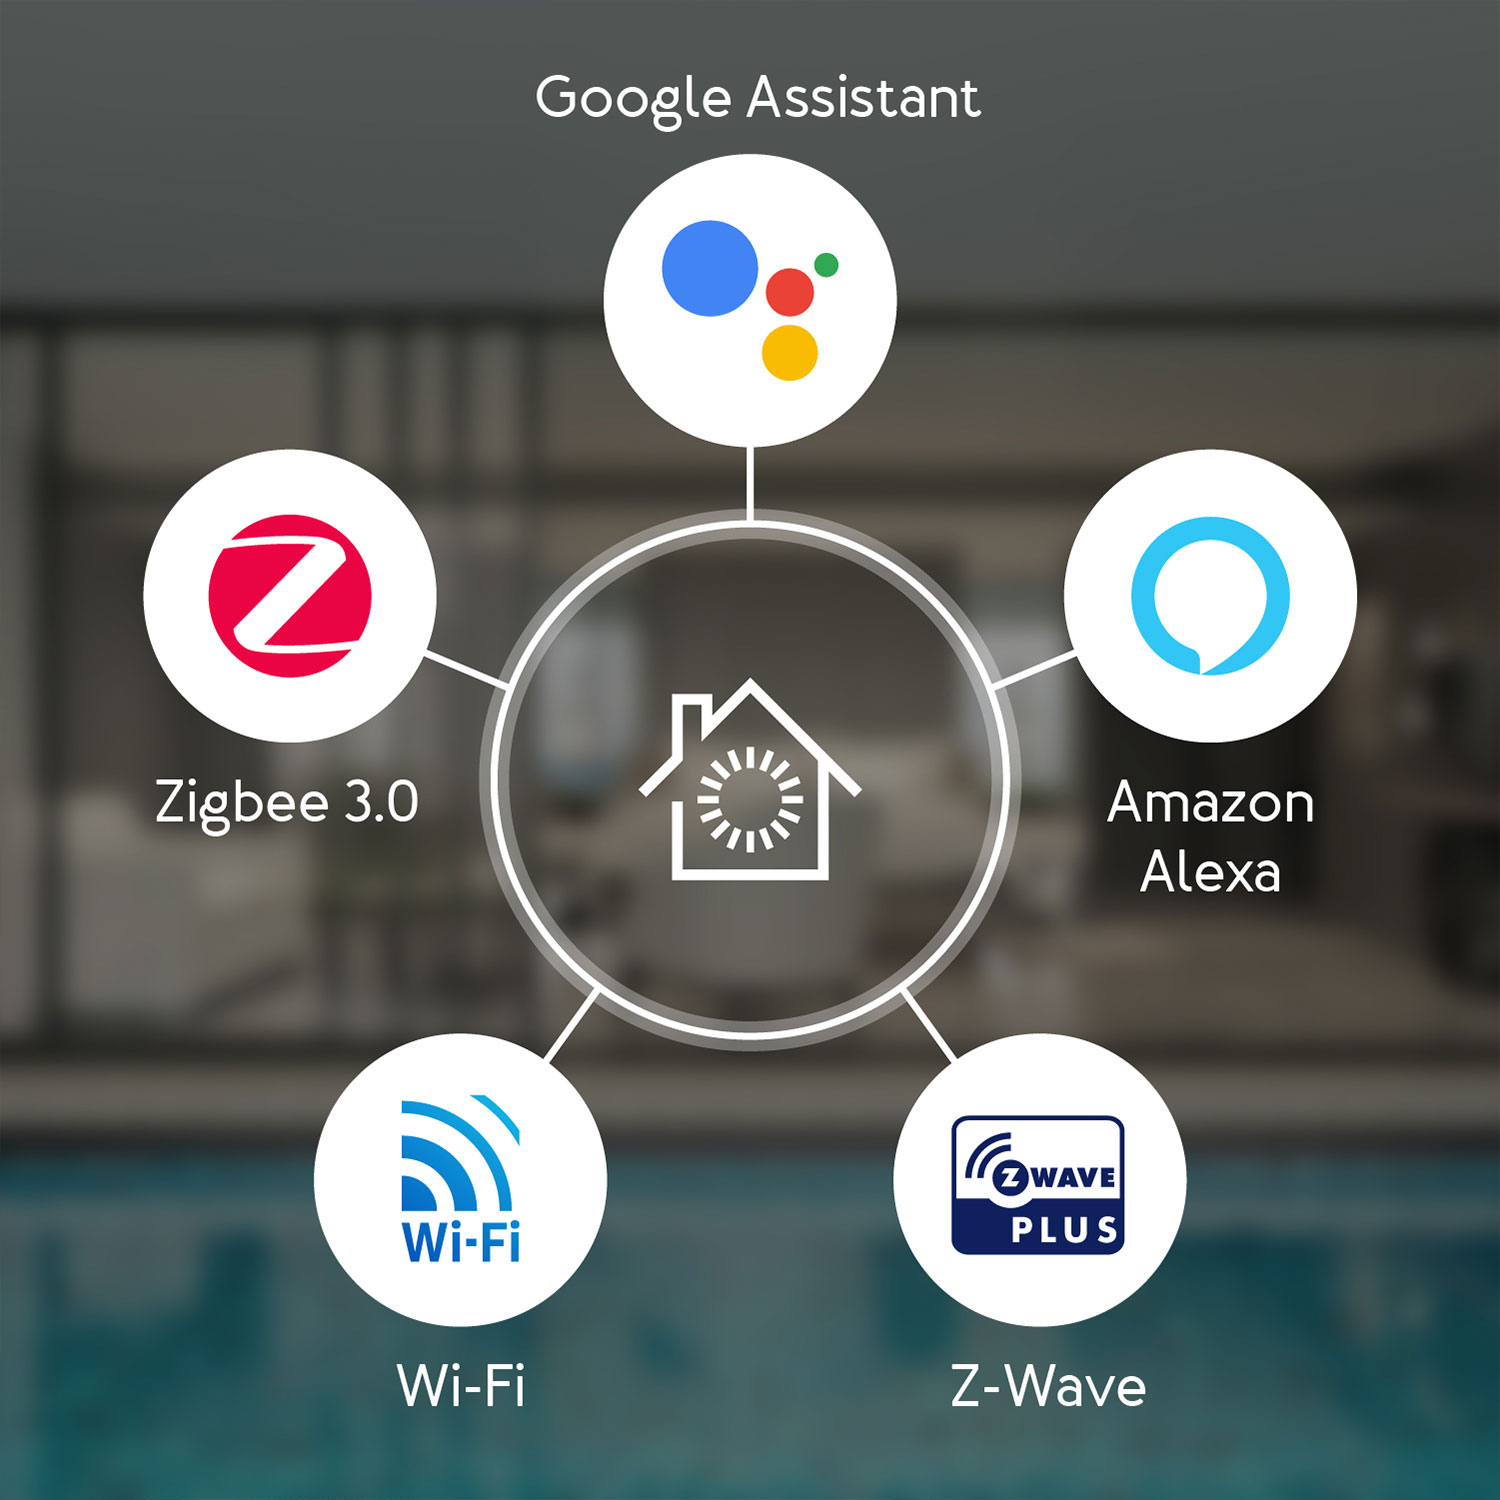 AEOTEC SMARTTHINGS Home Plus, Google WLAN Hub Z-Wave, Hub, Zigbee, SmartThings | Z-Wave Amazon Works Assistant, Alexa, Hub as Home Weiß Smart Smart